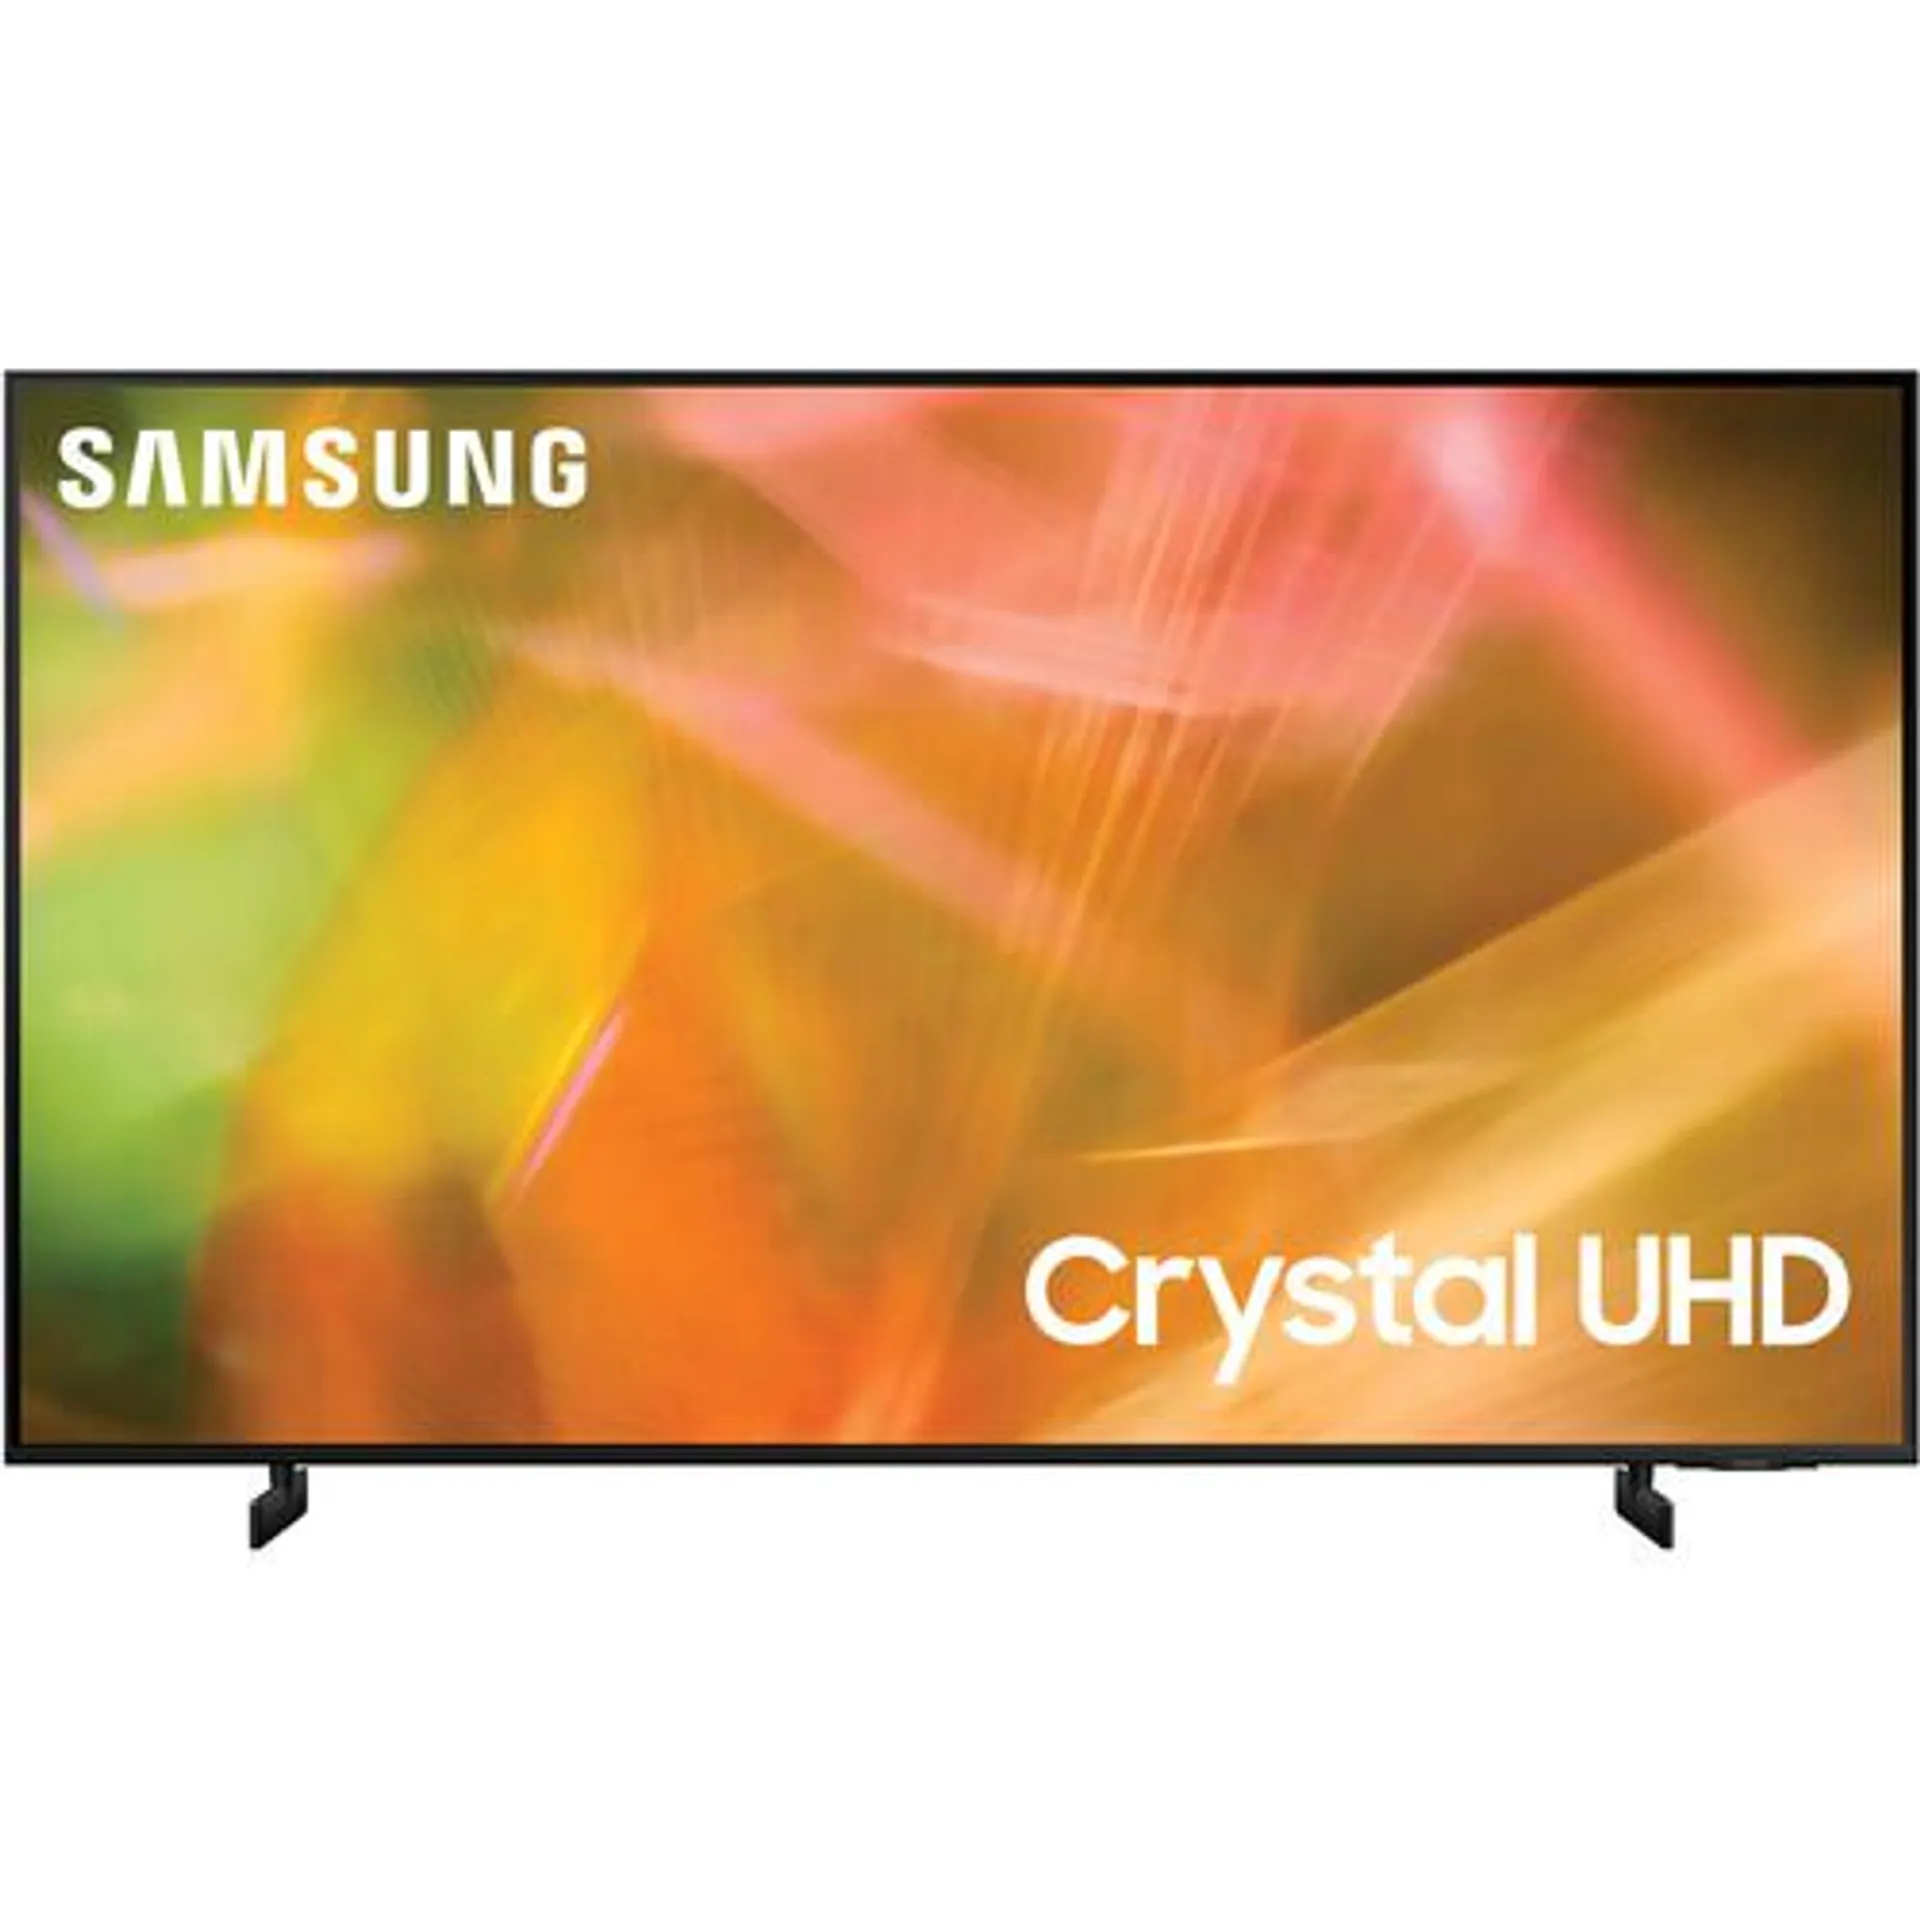 Samsung AU8000 55" Class HDR 4K UHD Smart LED TV